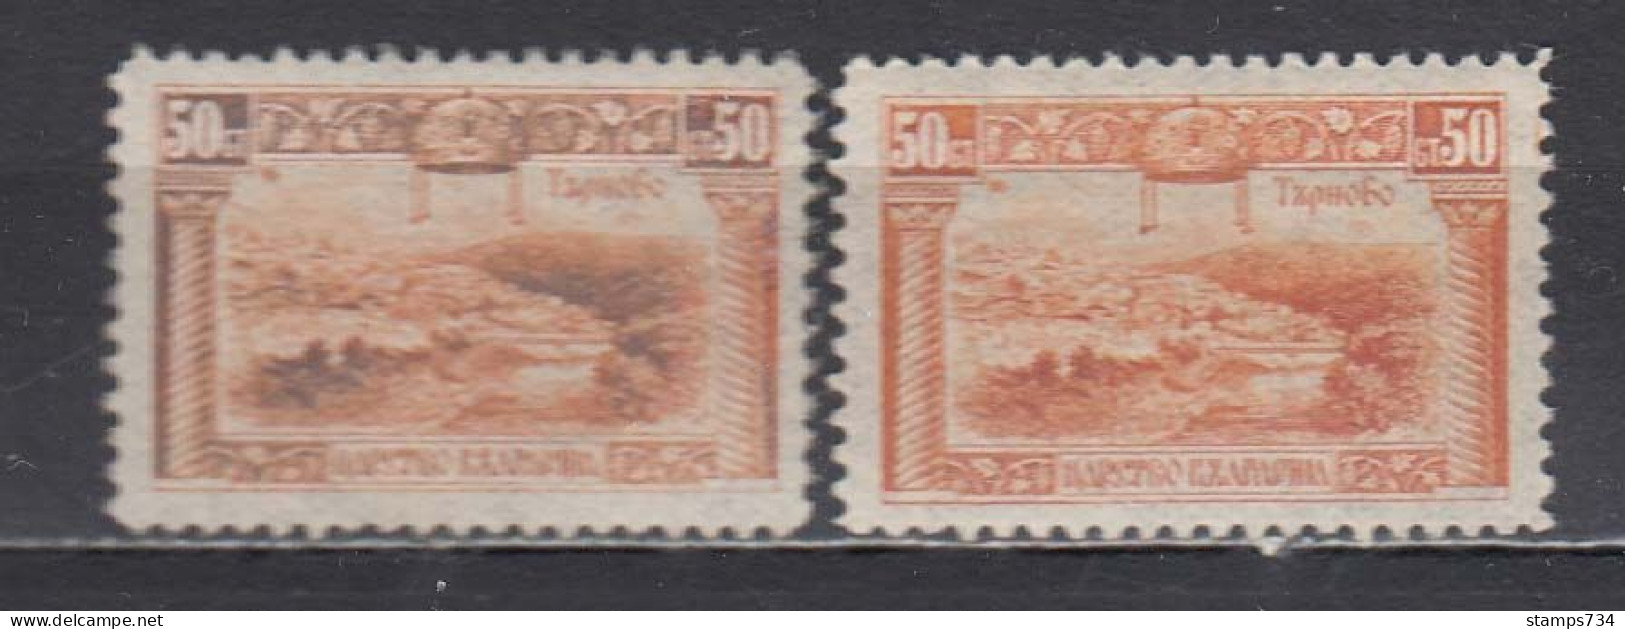 Bulgaria 1921 - Regular Stamps, 50 St,, Two Colors, Mi-Nr. 159, MNH** - Variedades Y Curiosidades